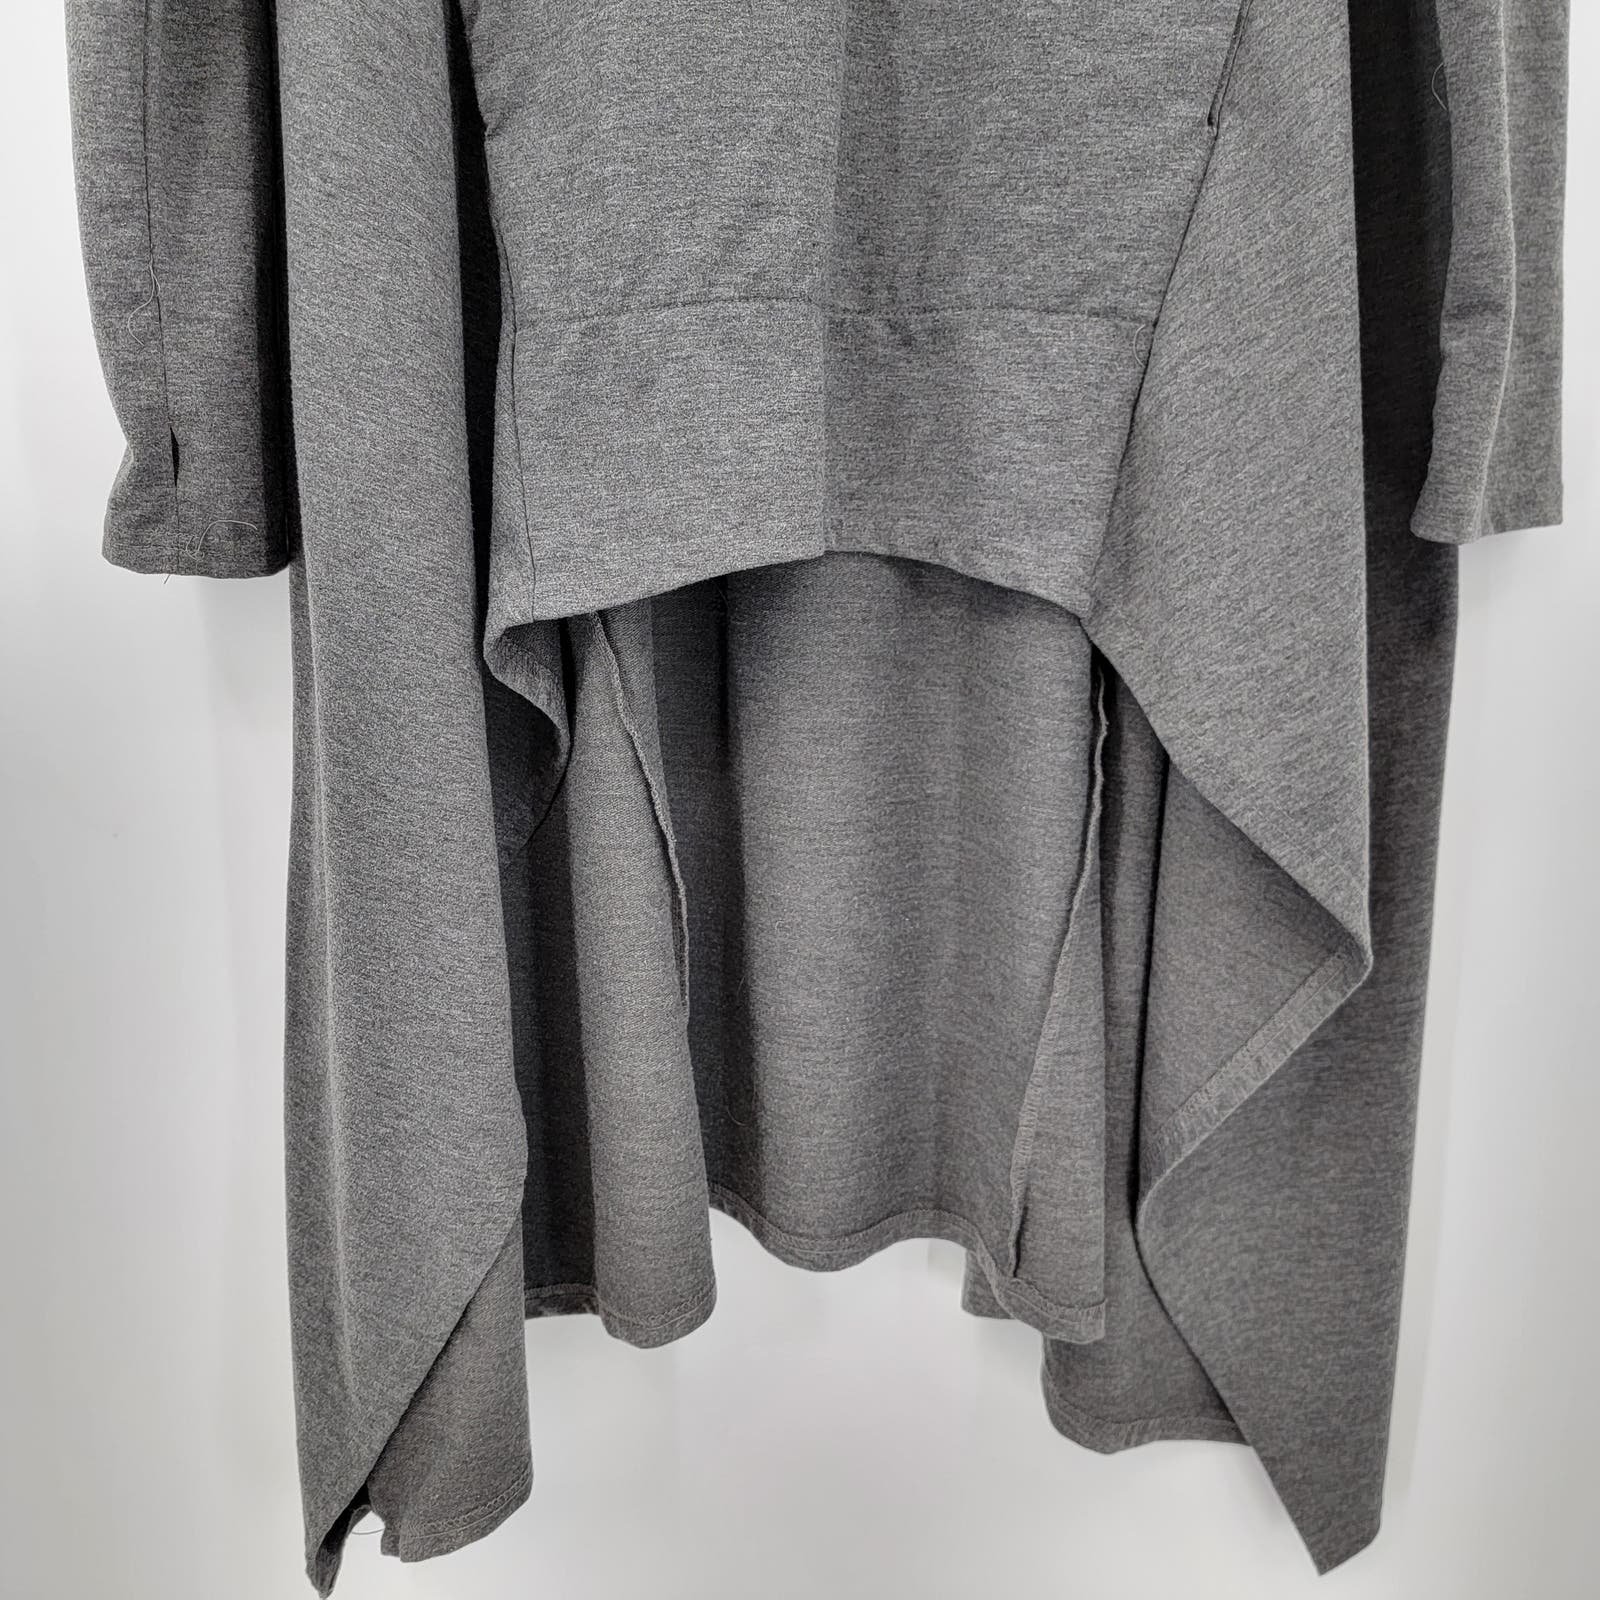 floor price Cloak Top With Cowl Hood High Low Hem Cape Sweatshirt Asymmetric Long Hoodie K8pVwgZsI for sale